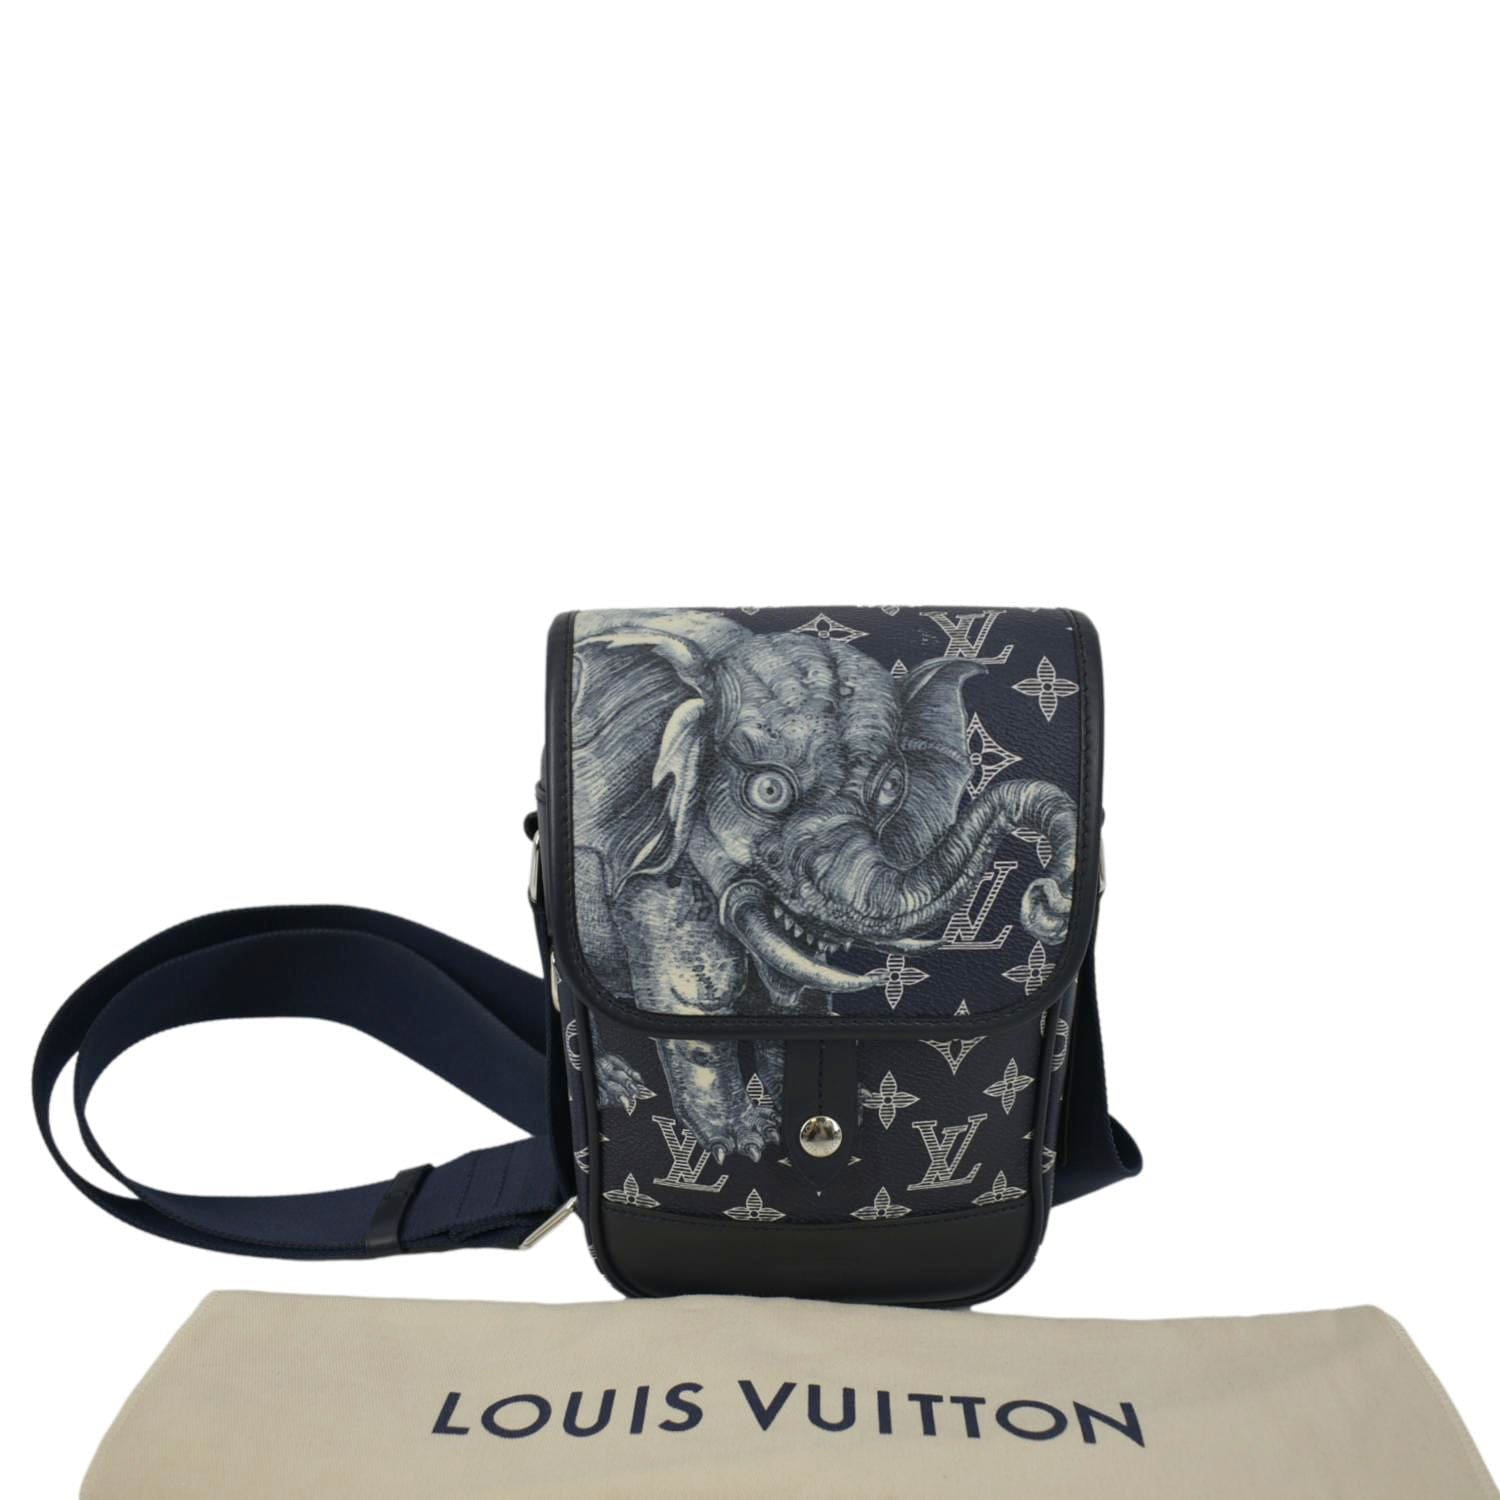 Louis Vuitton - Louis Vuitton Chapman-Brothers Collection Messenger